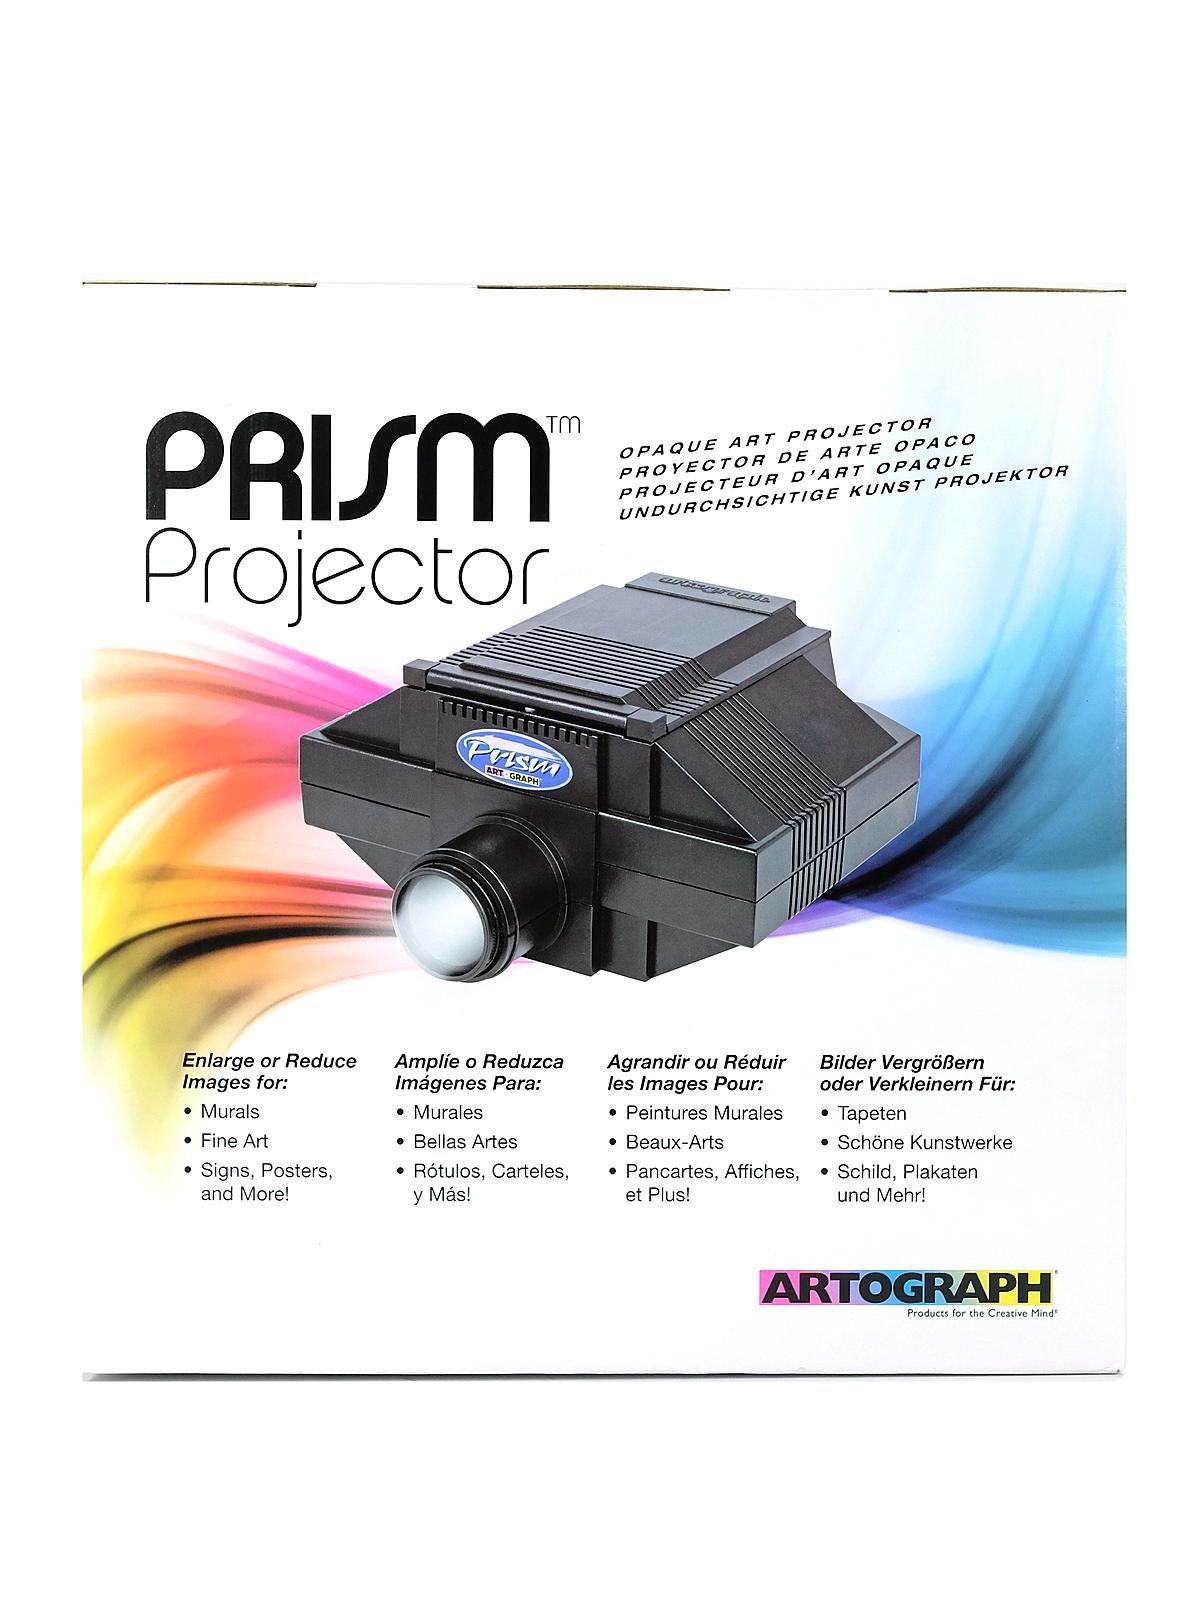 Artograph - Prism Image Projectors